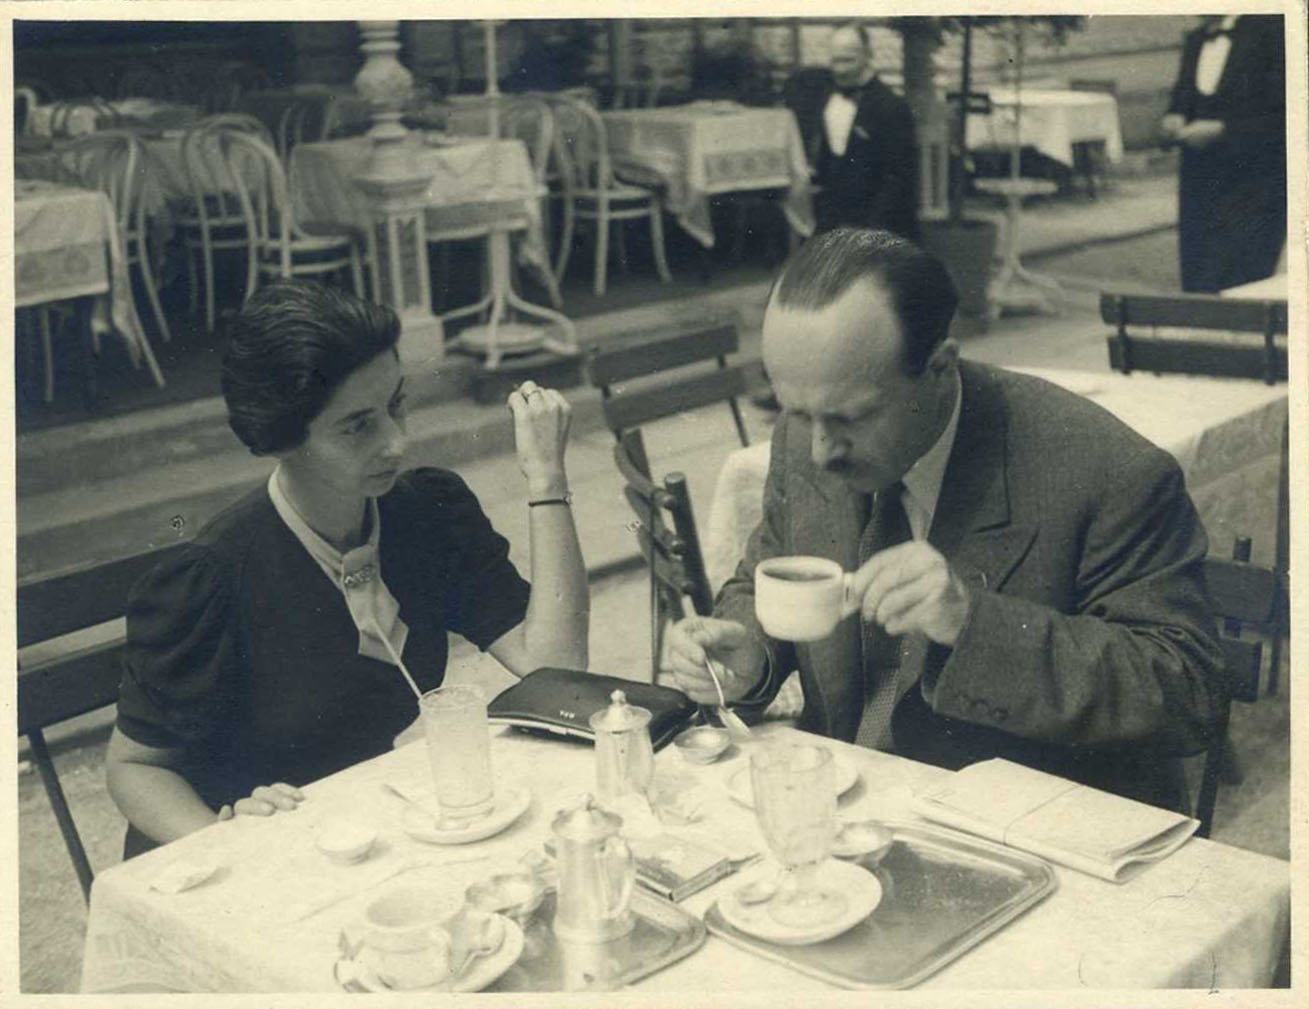 Grete and Edward Bibring enjoying a meal.